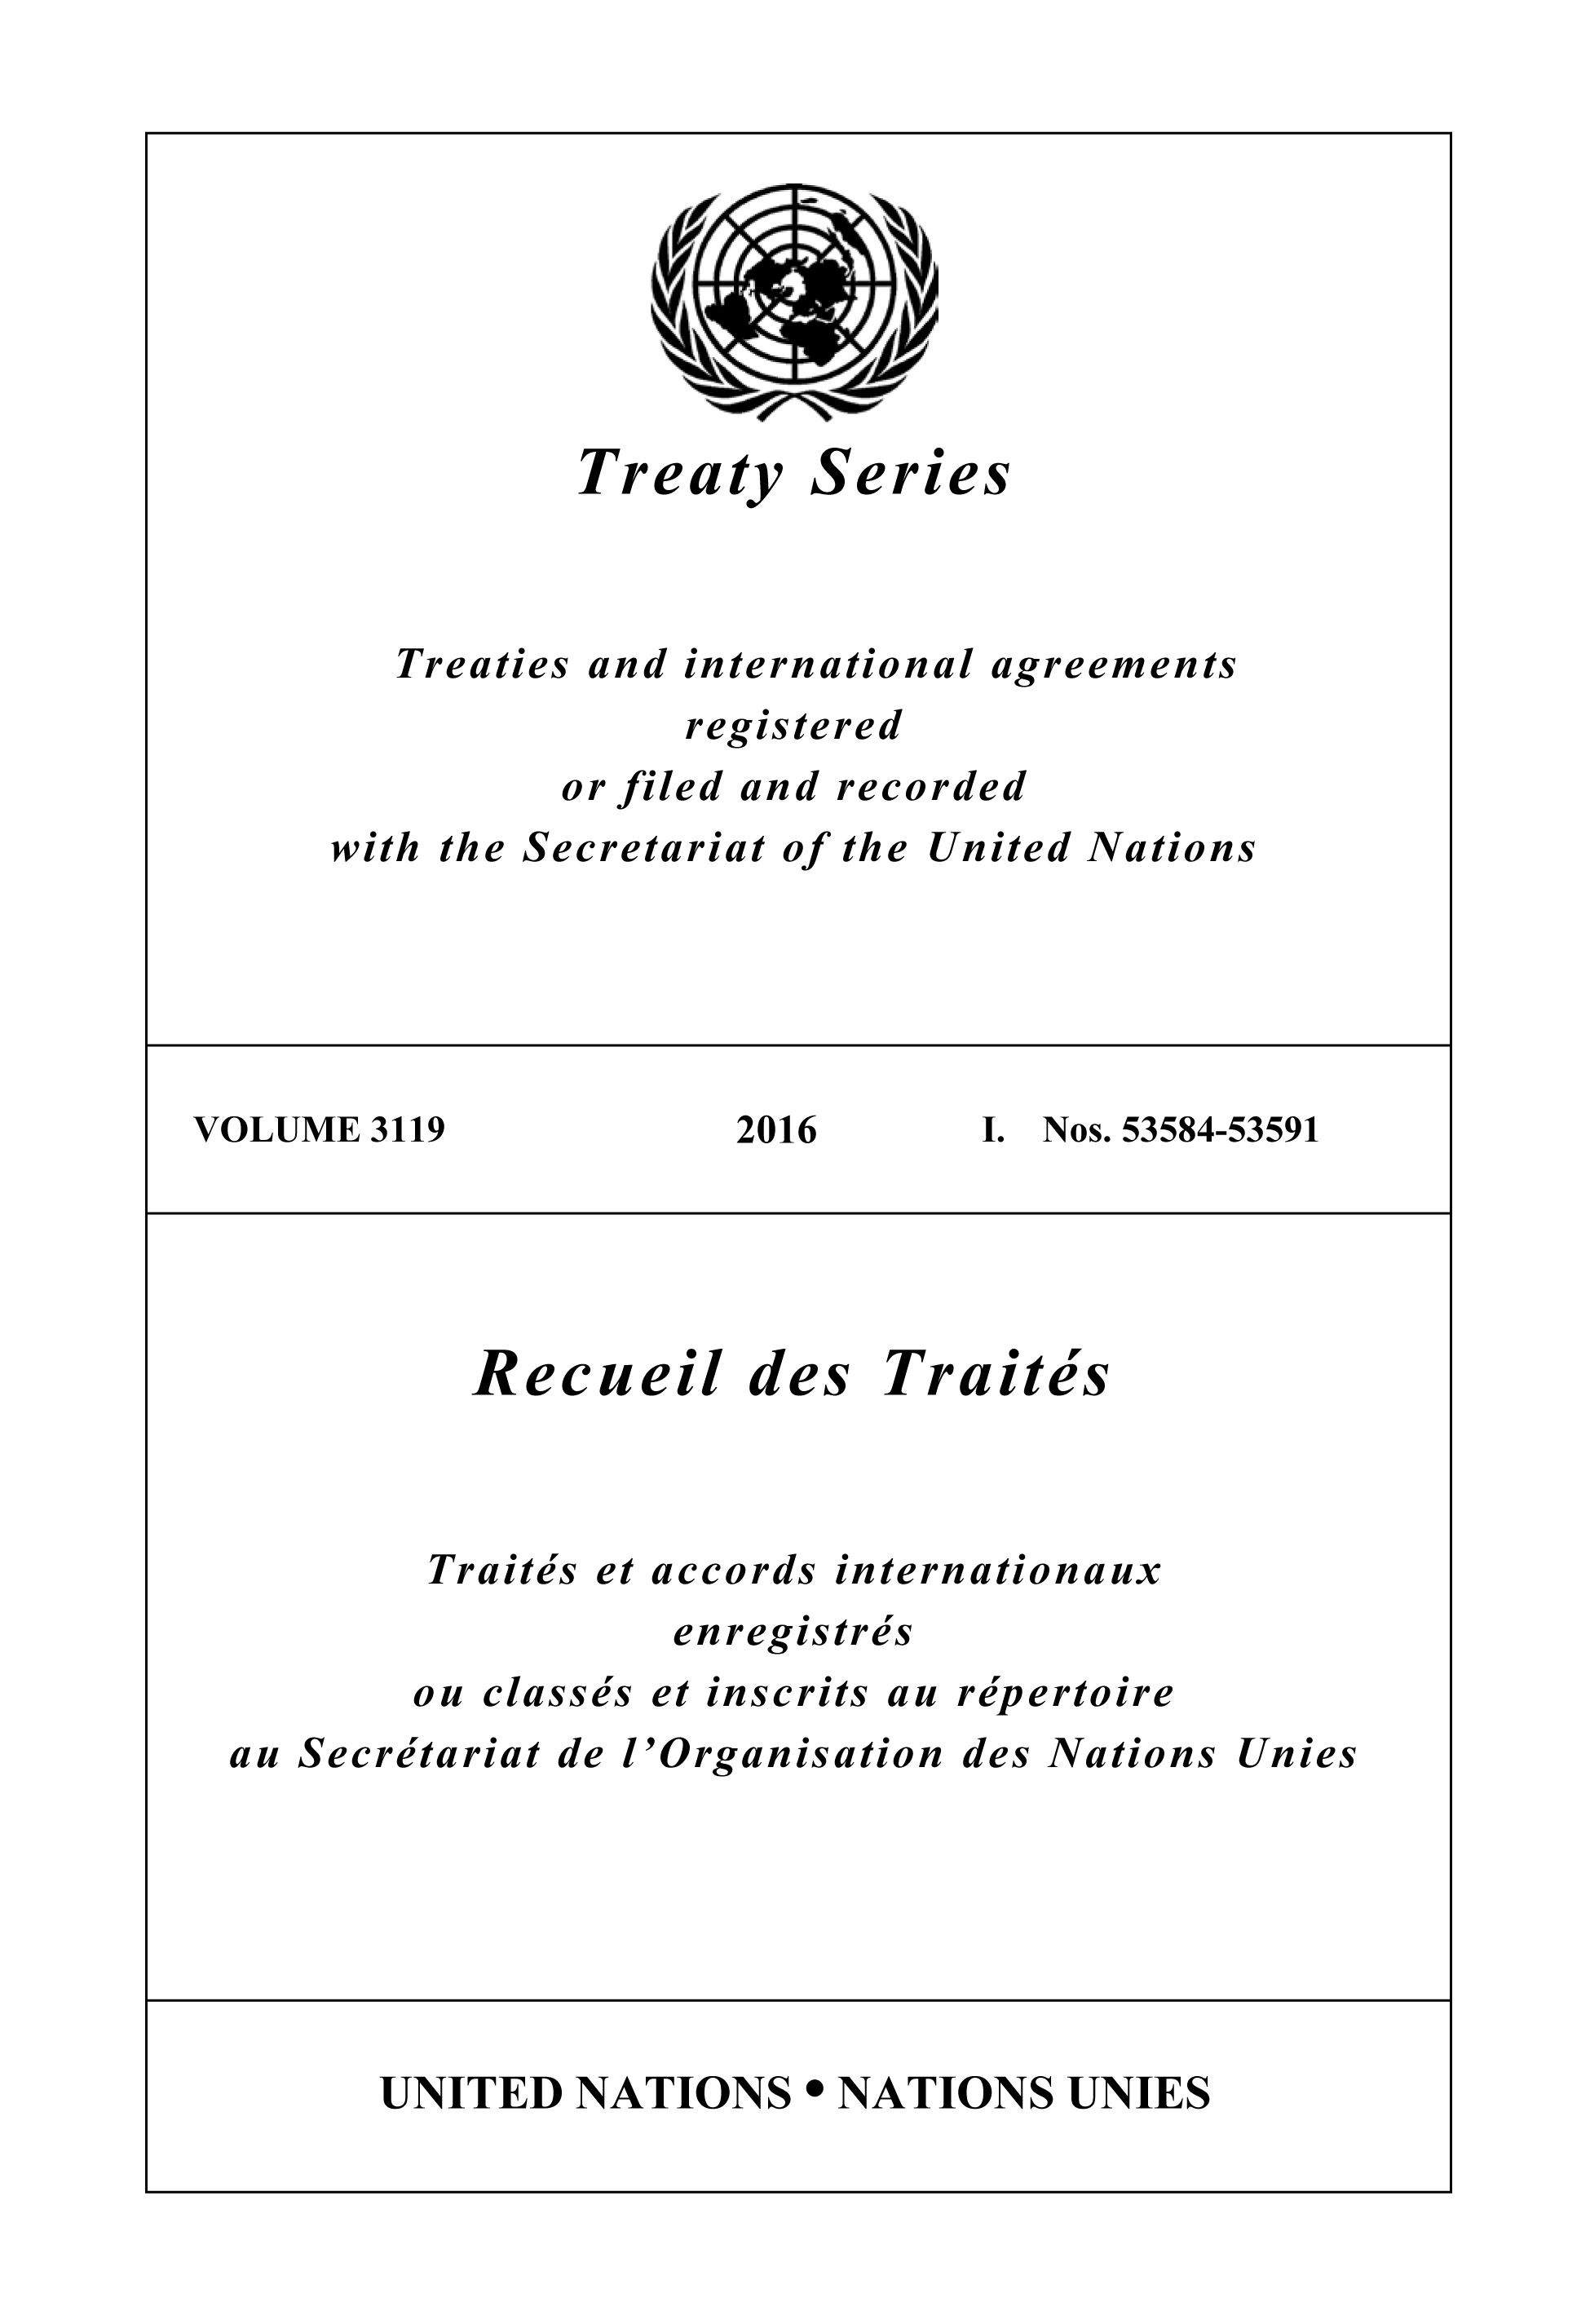 image of Treaty Series 3119